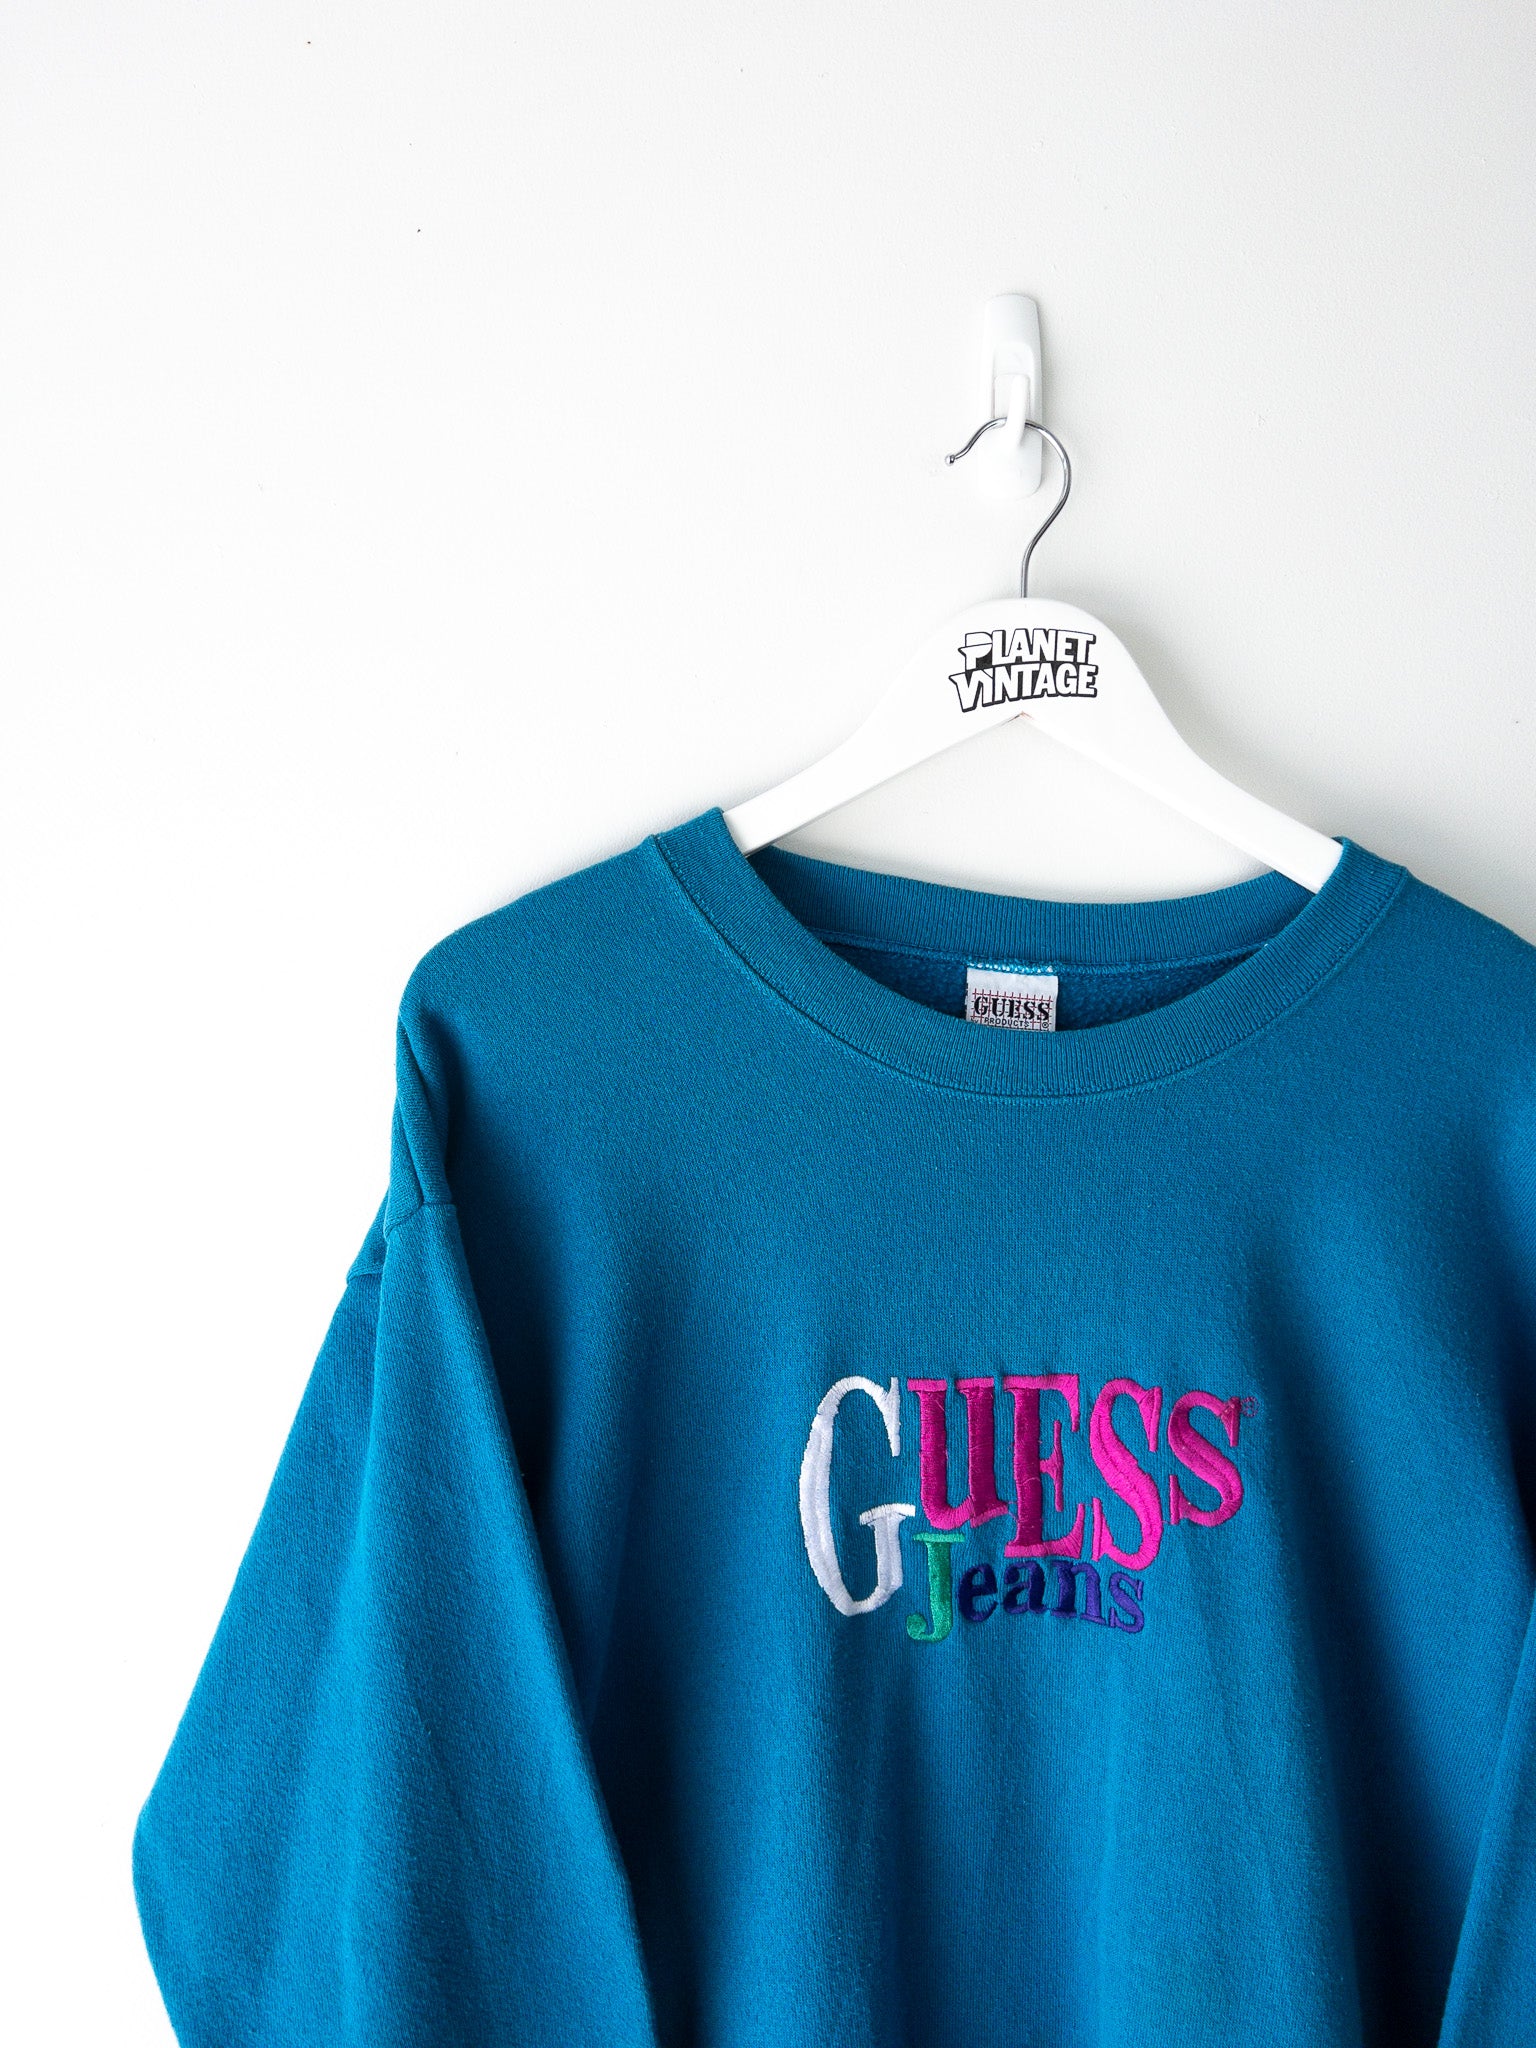 Vintage Guess Sweatshirt (L)